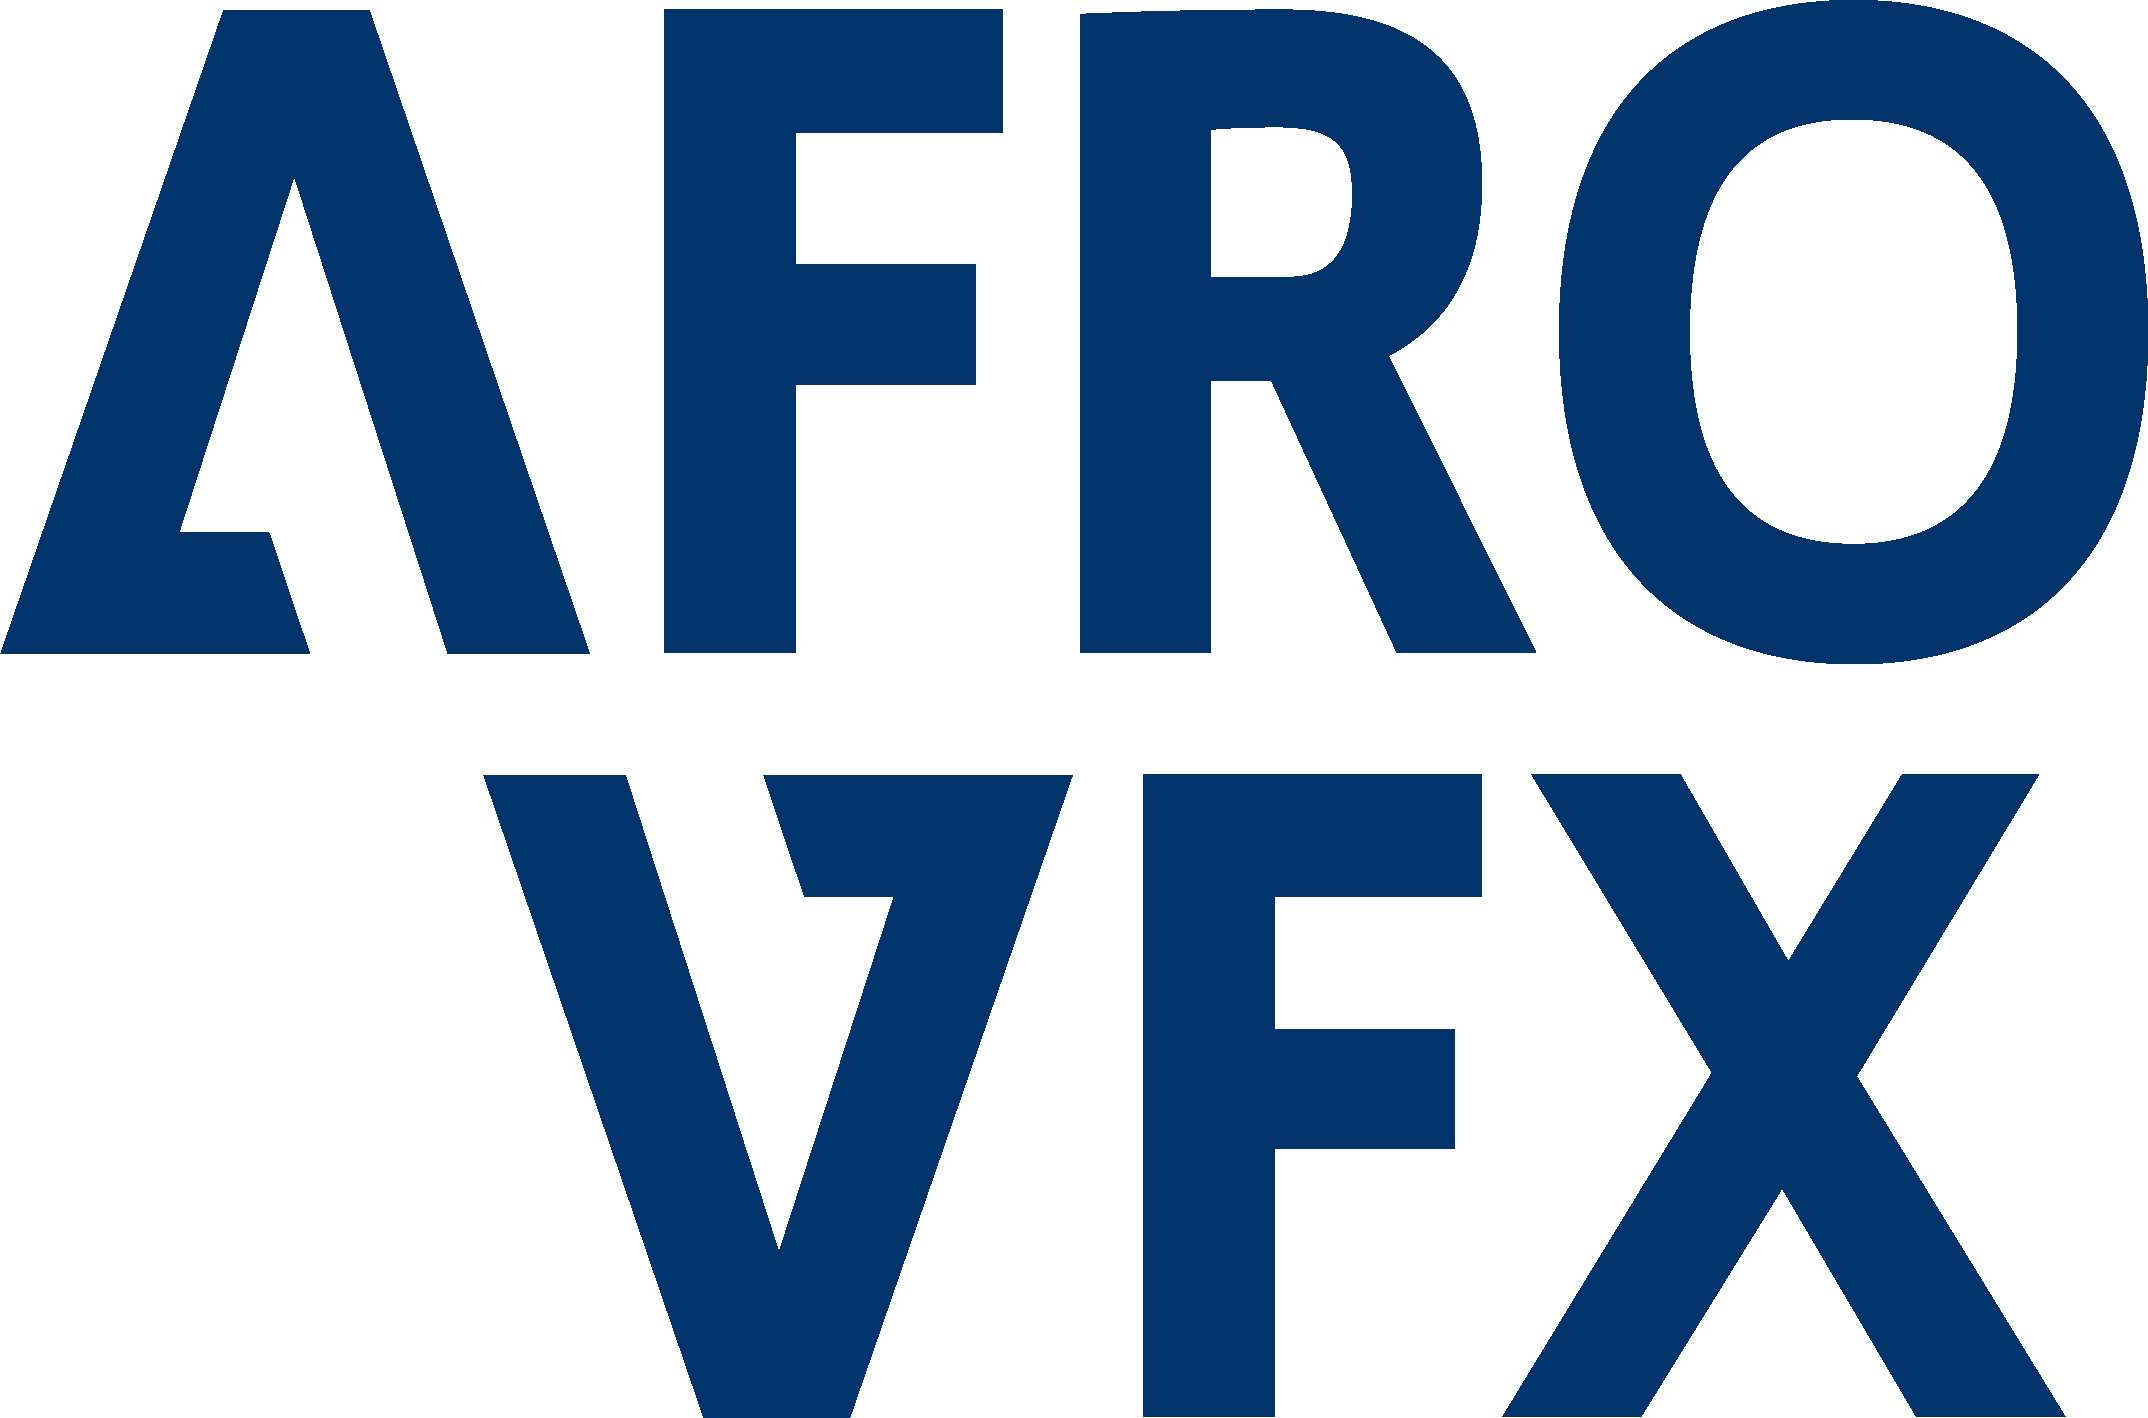 AFRO-VFX